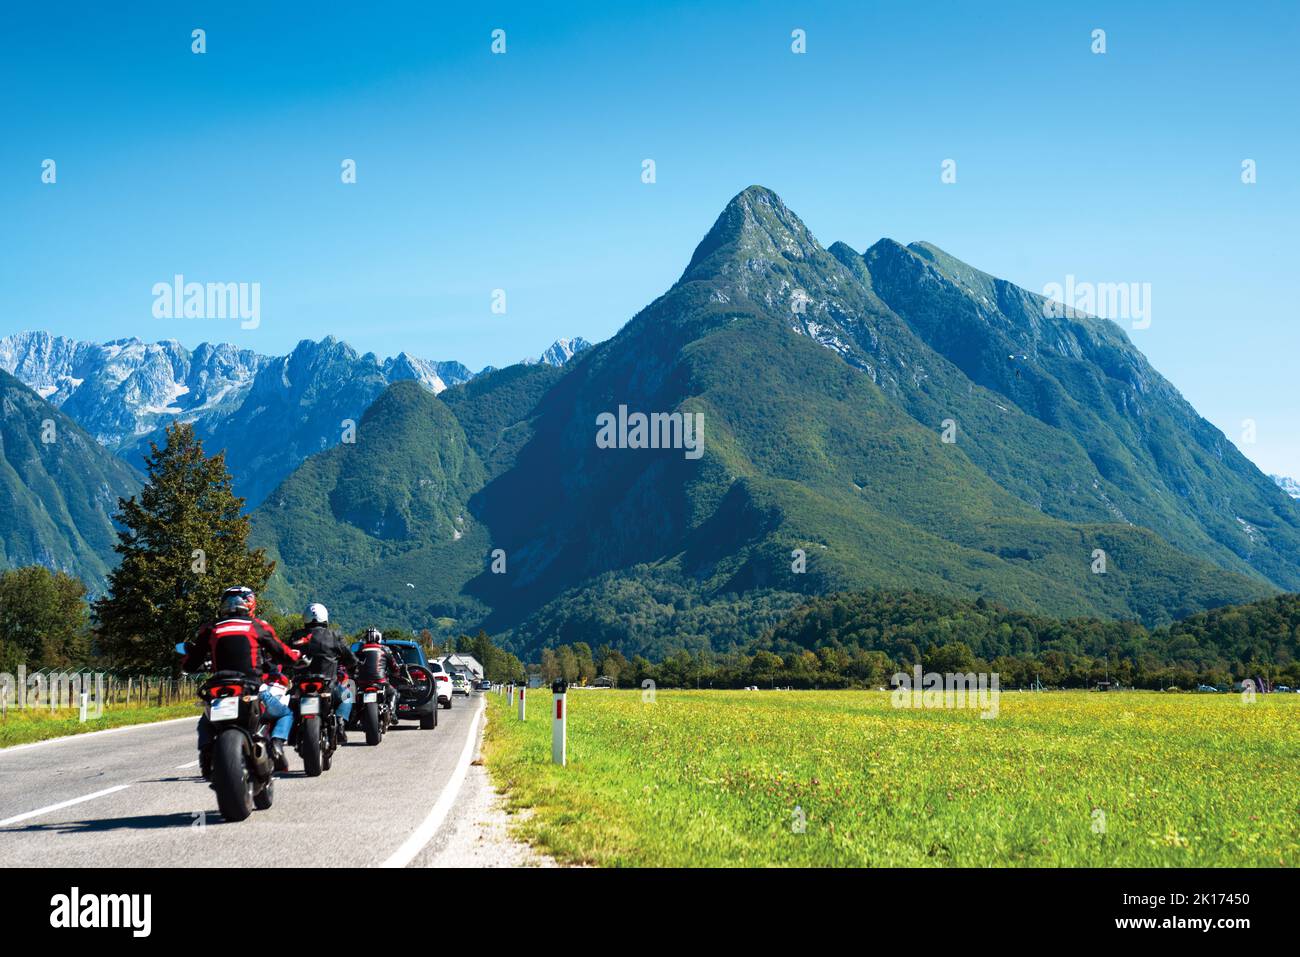 Motorcyclist column moving on alpine highway Stock Photo